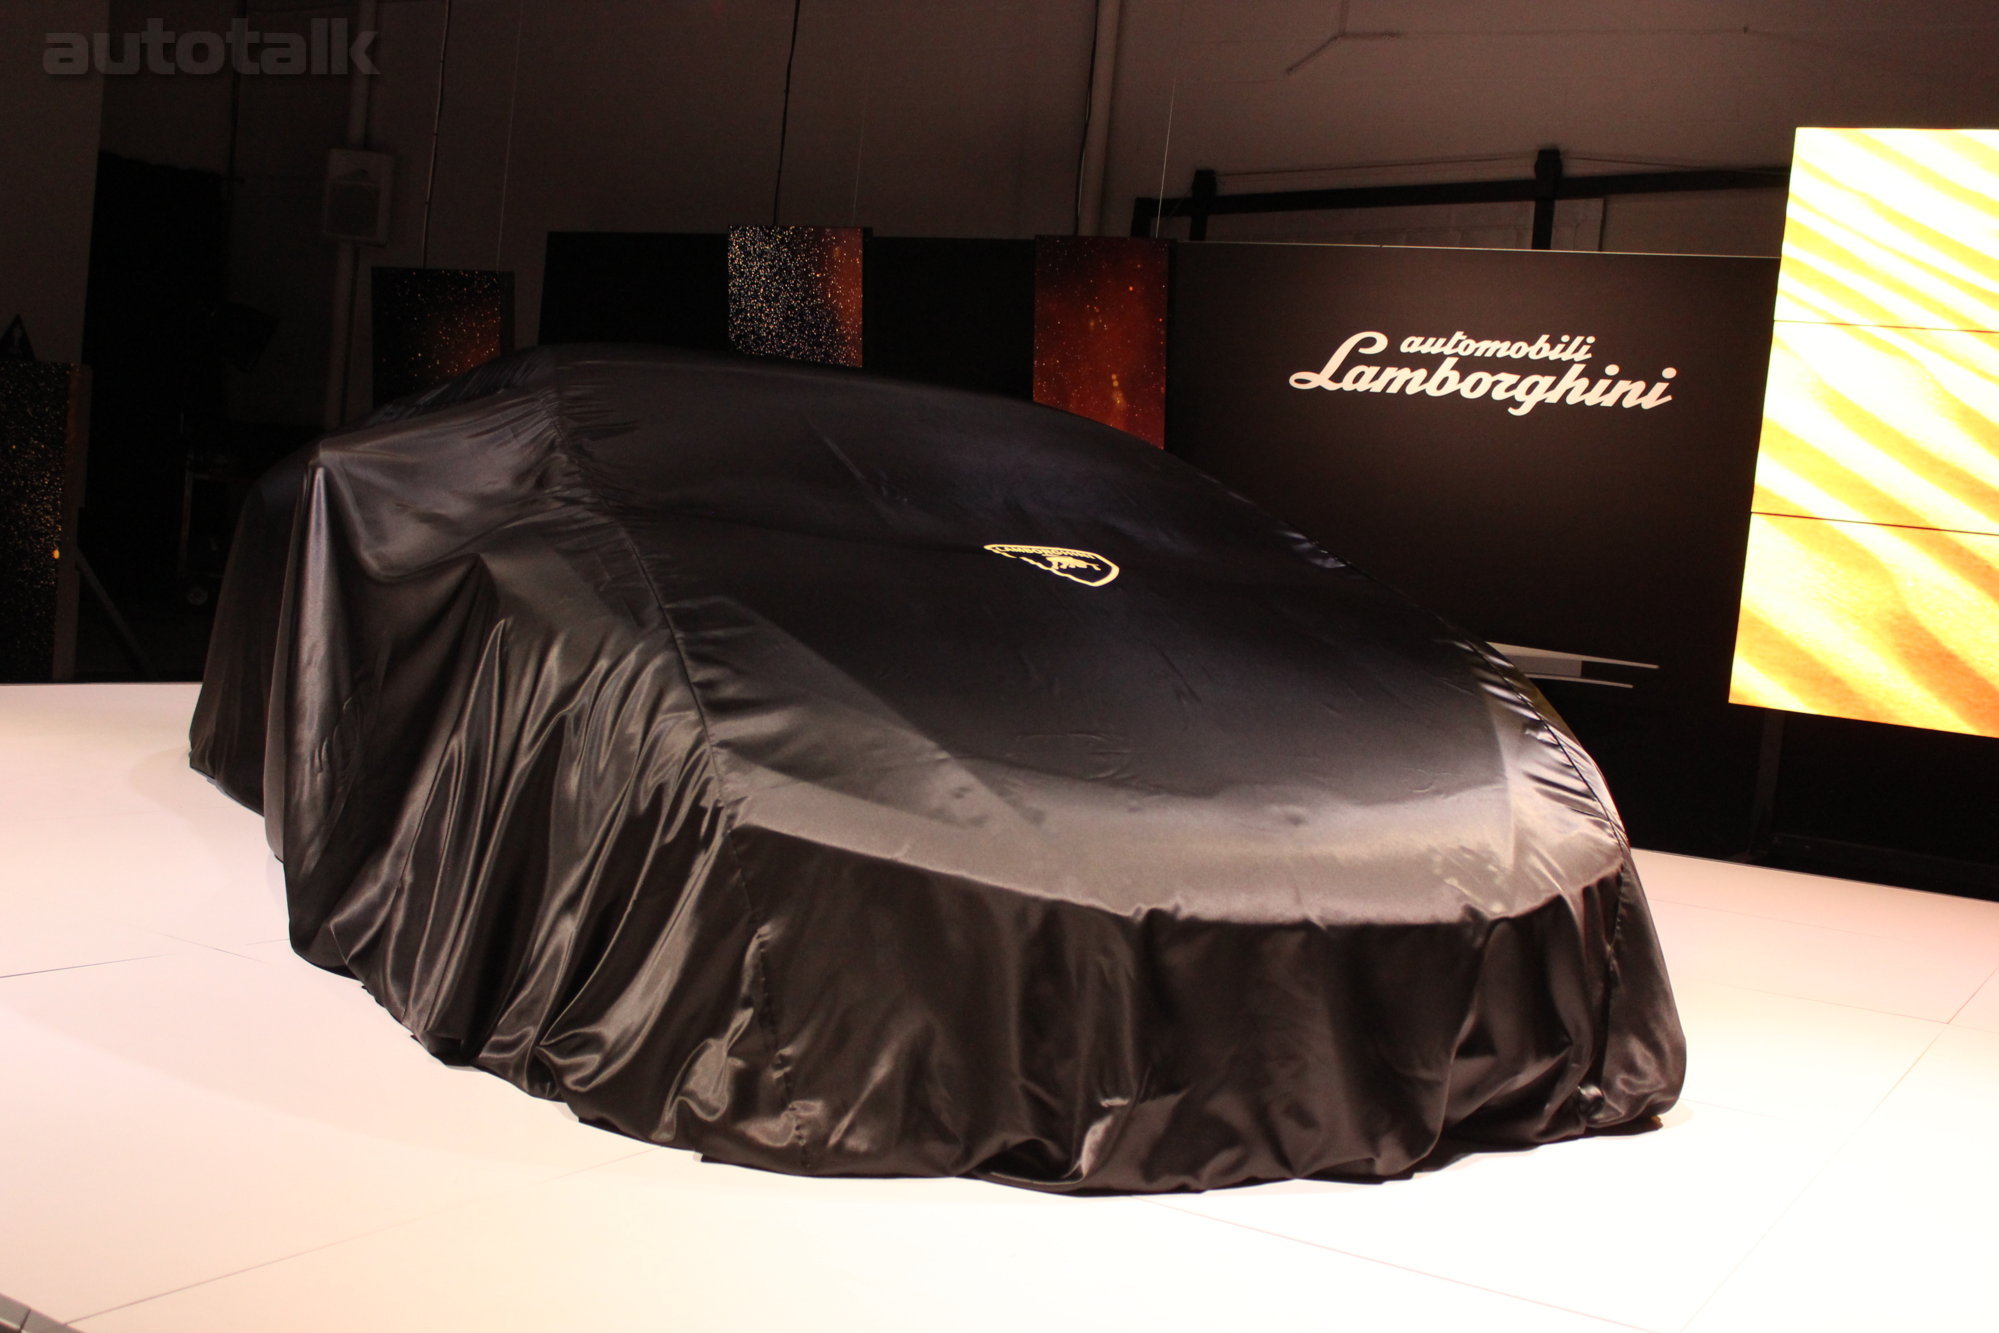 2016 Lamborghini Huracan LP 580-2 Reveal